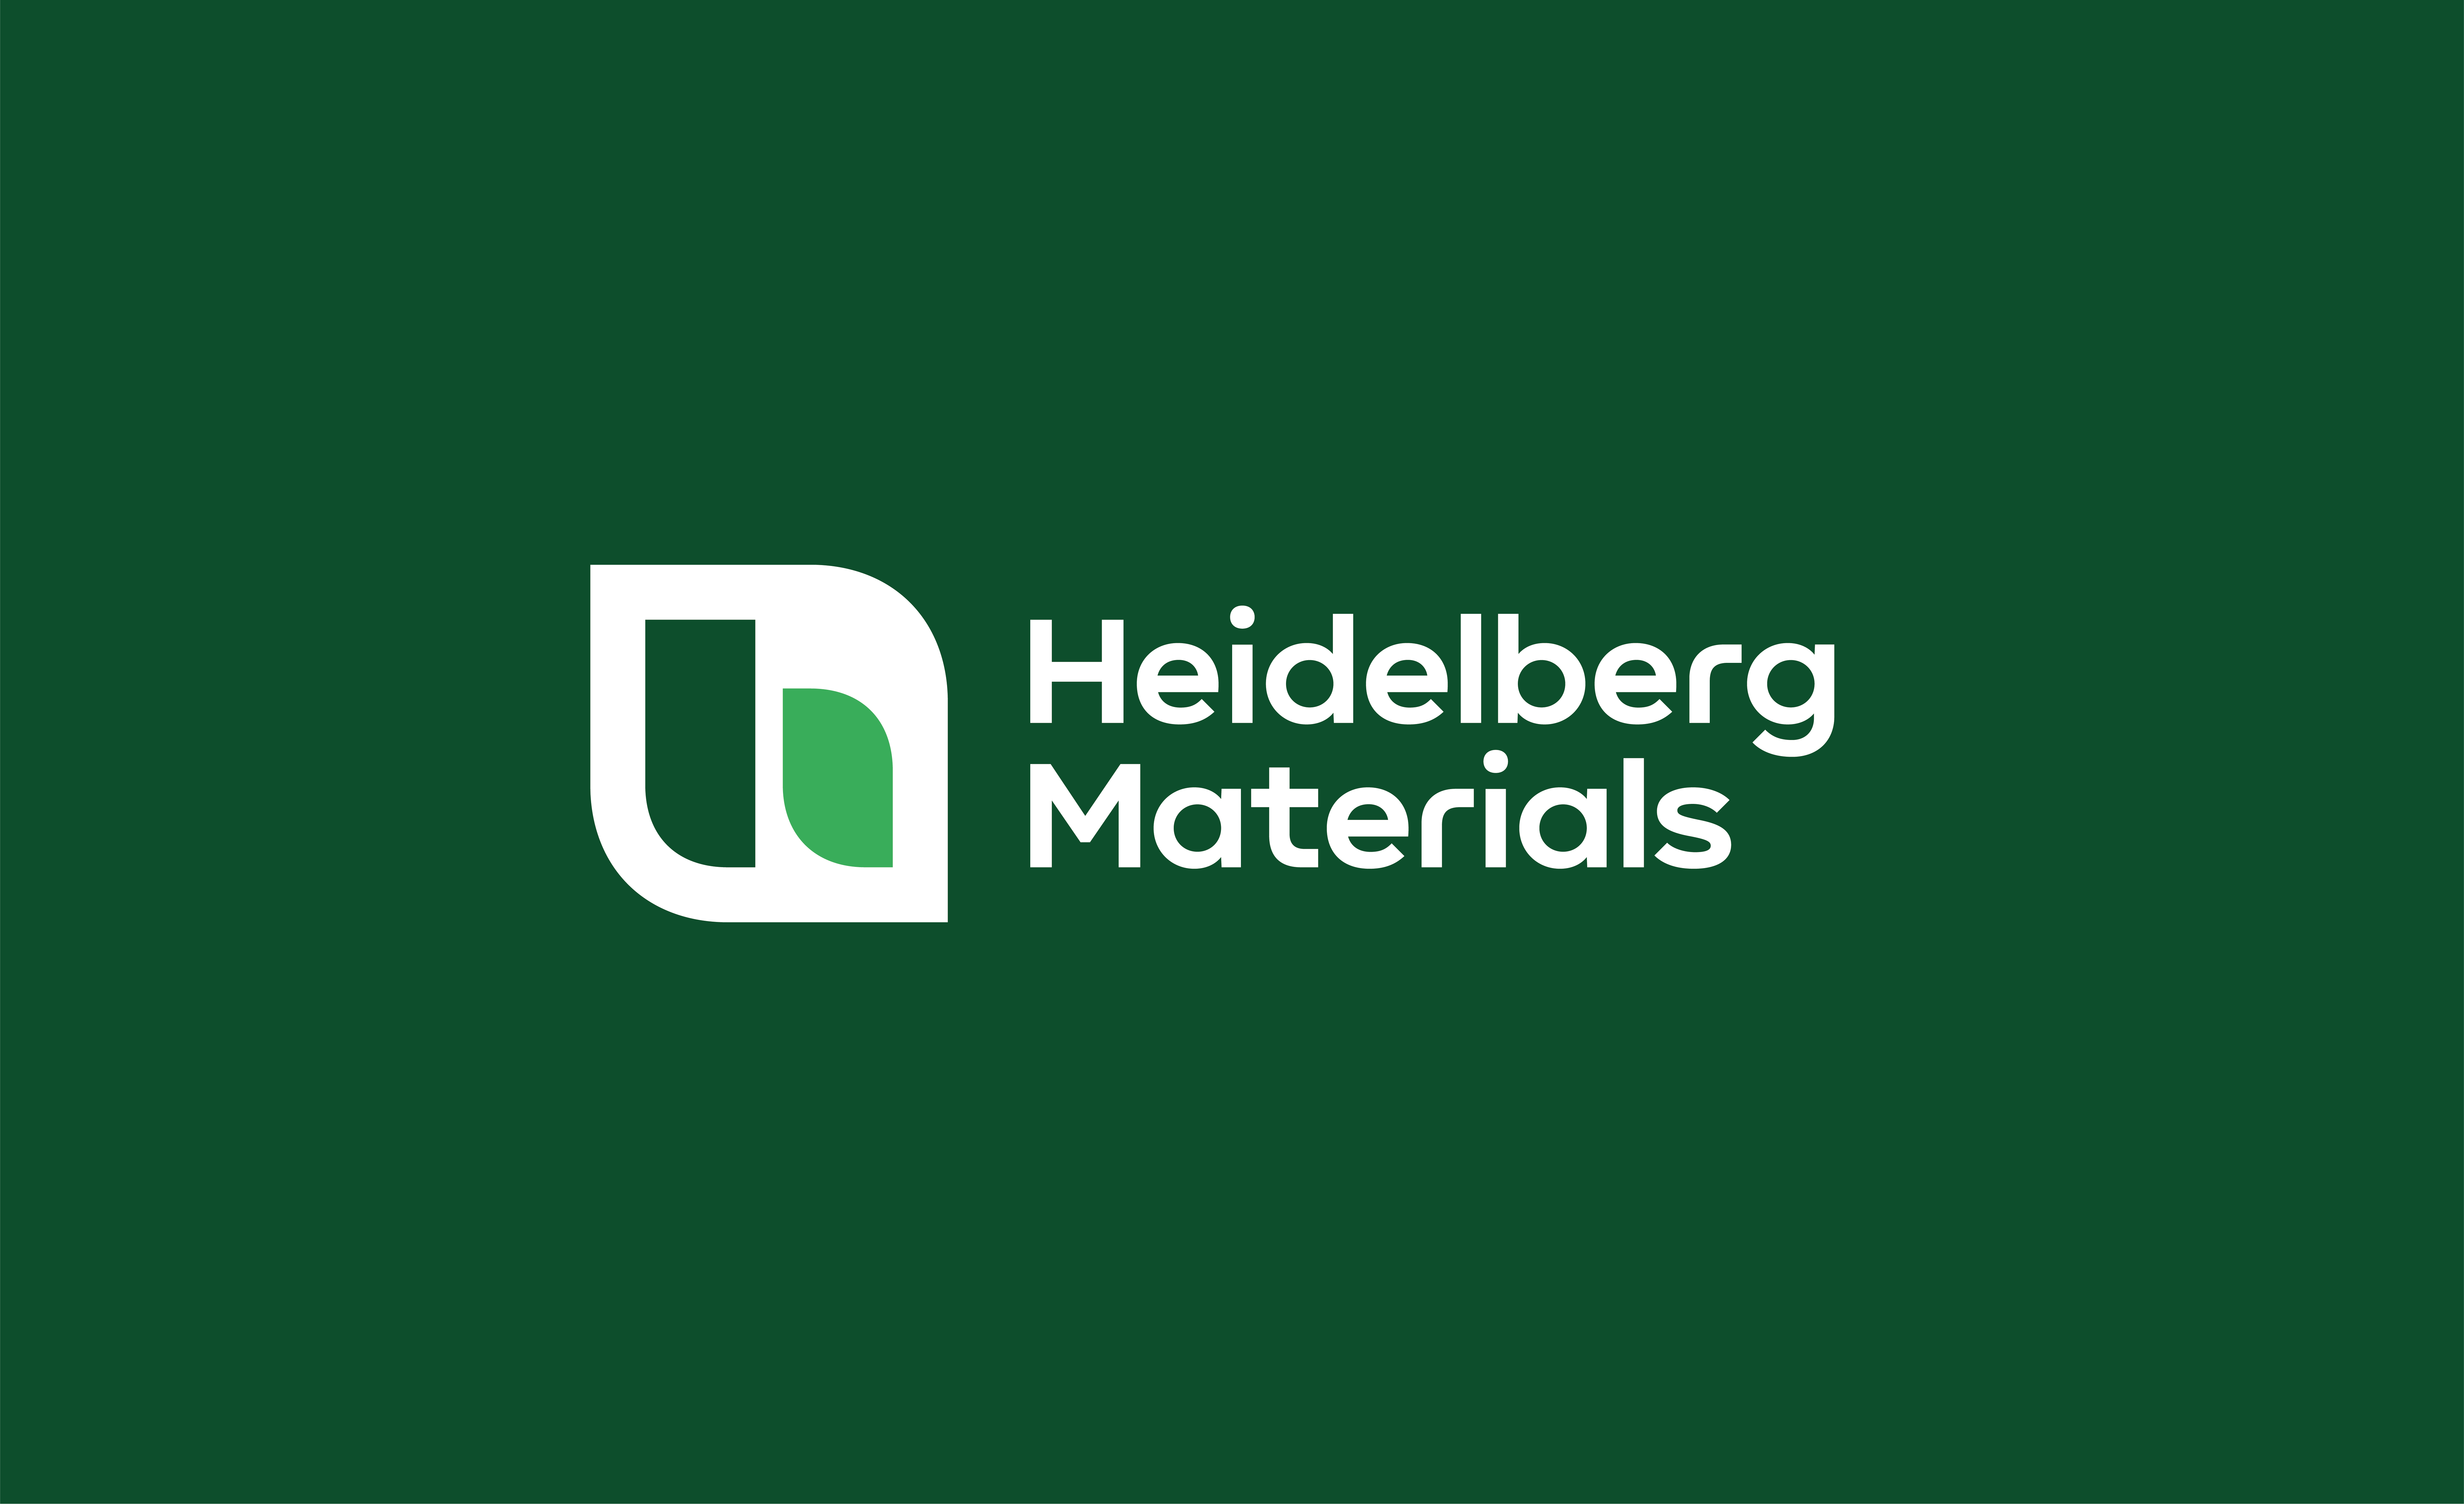 We are Heidelberg Materials